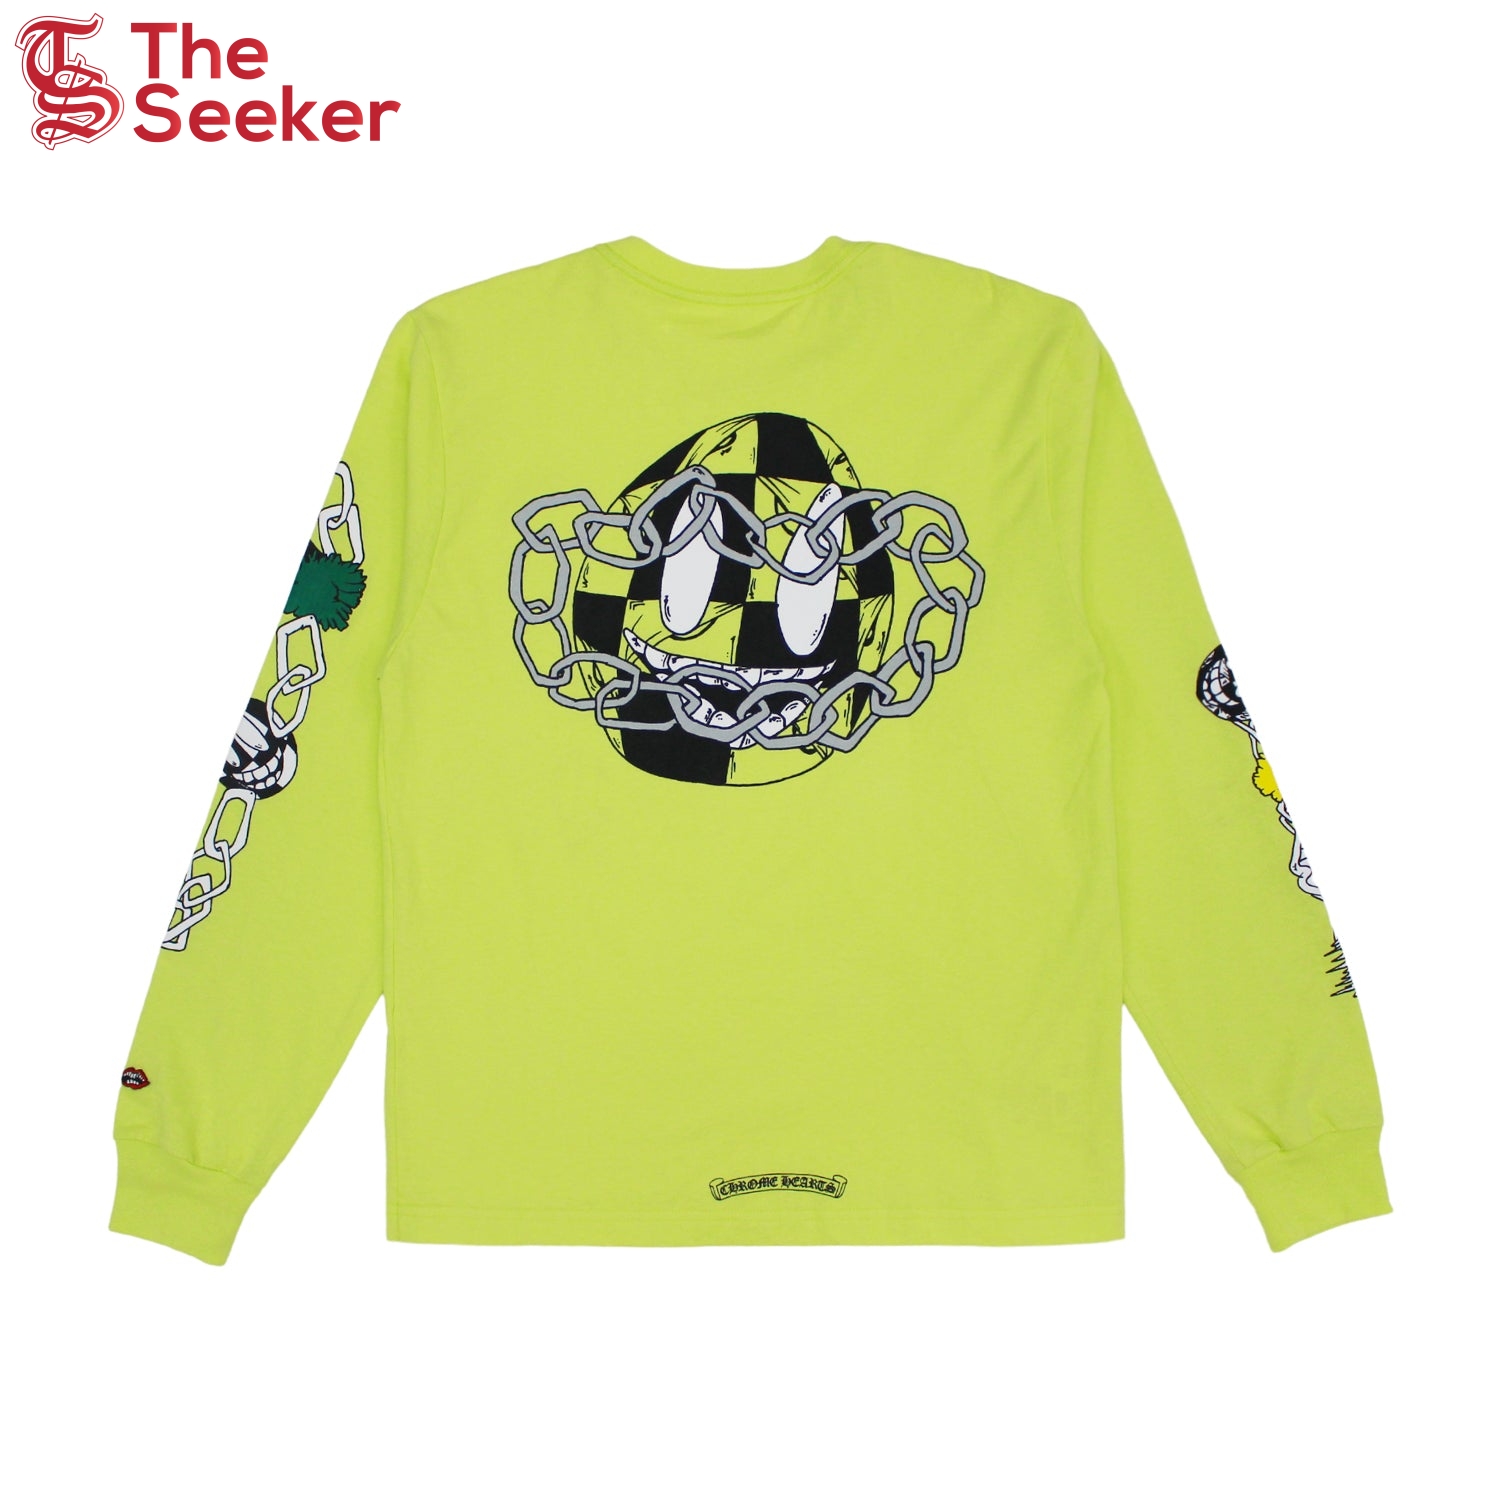 Chrome Hearts Matty Boy Link L/S T-shirt Lime Green